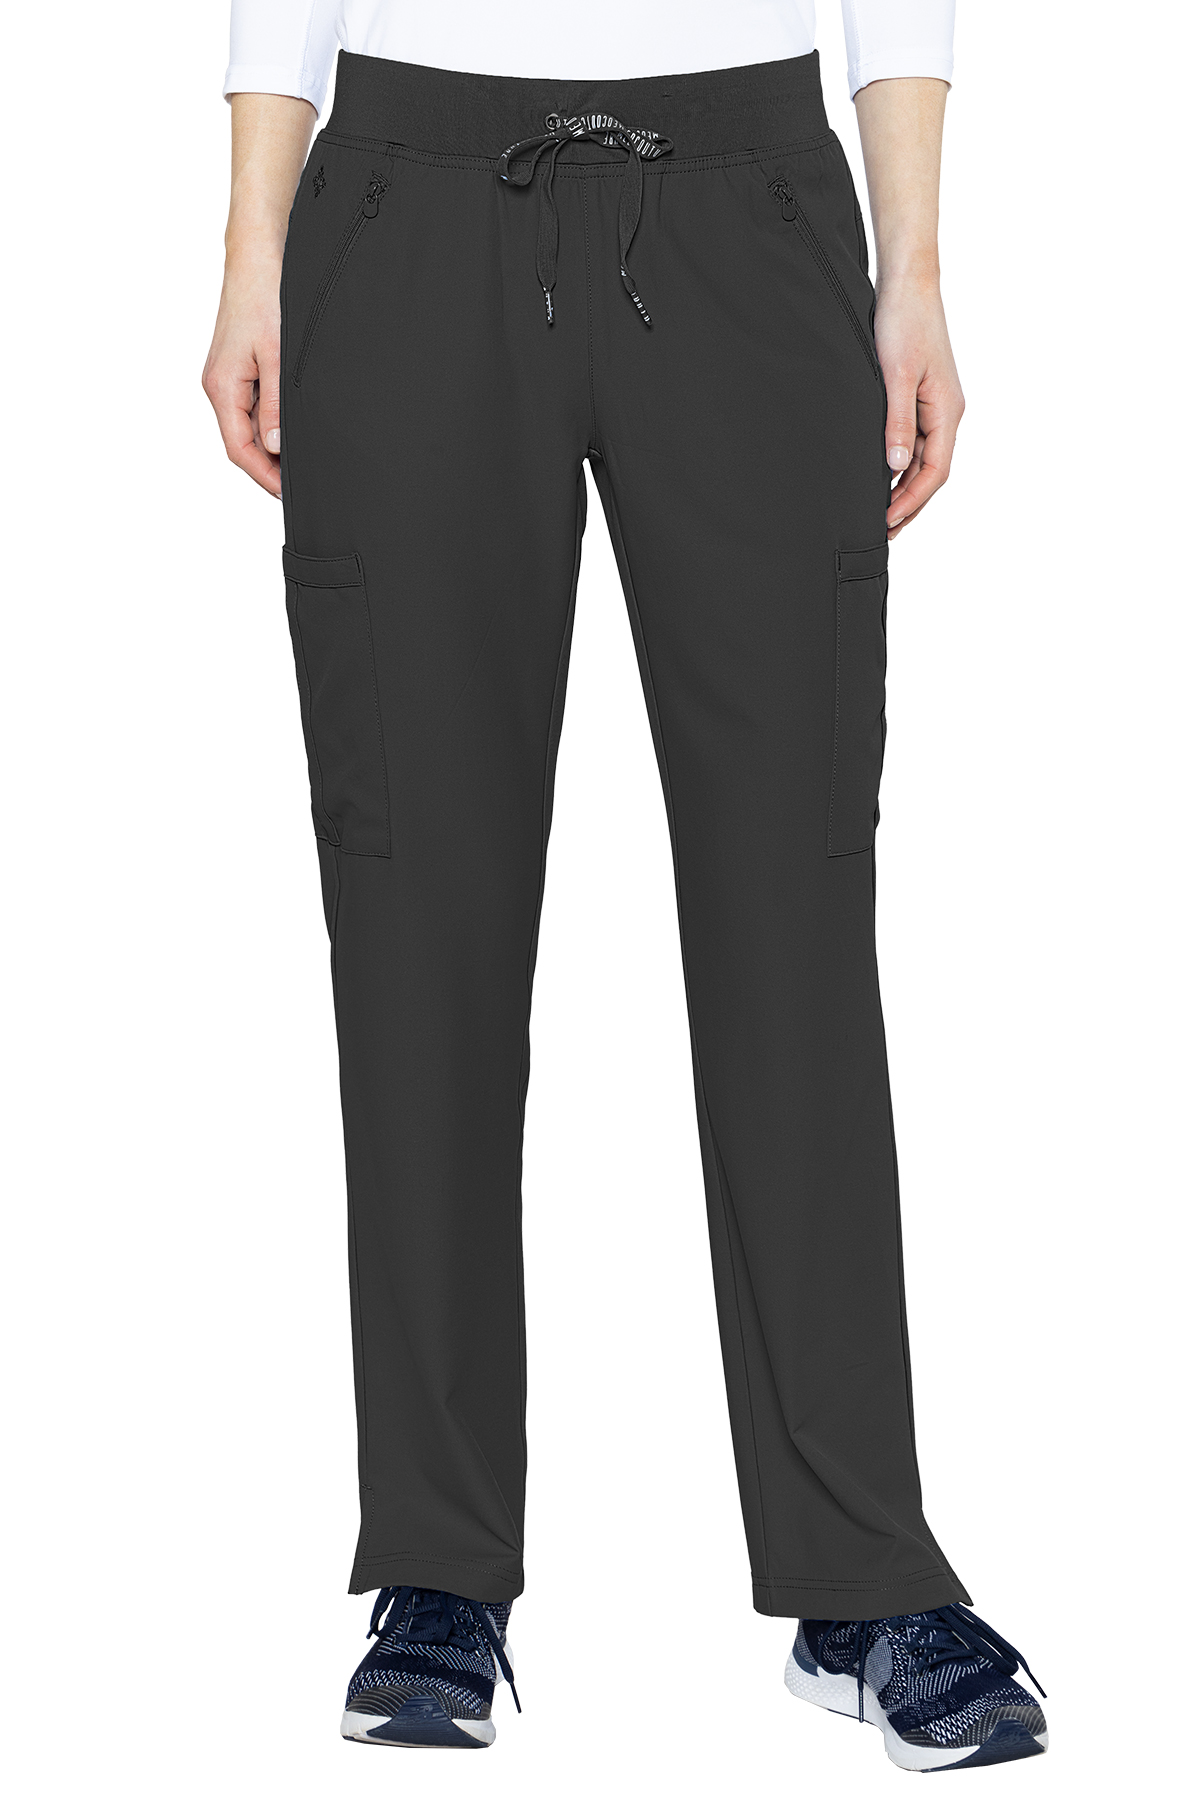 Women's Zipper Pant - Prestige Uniforms